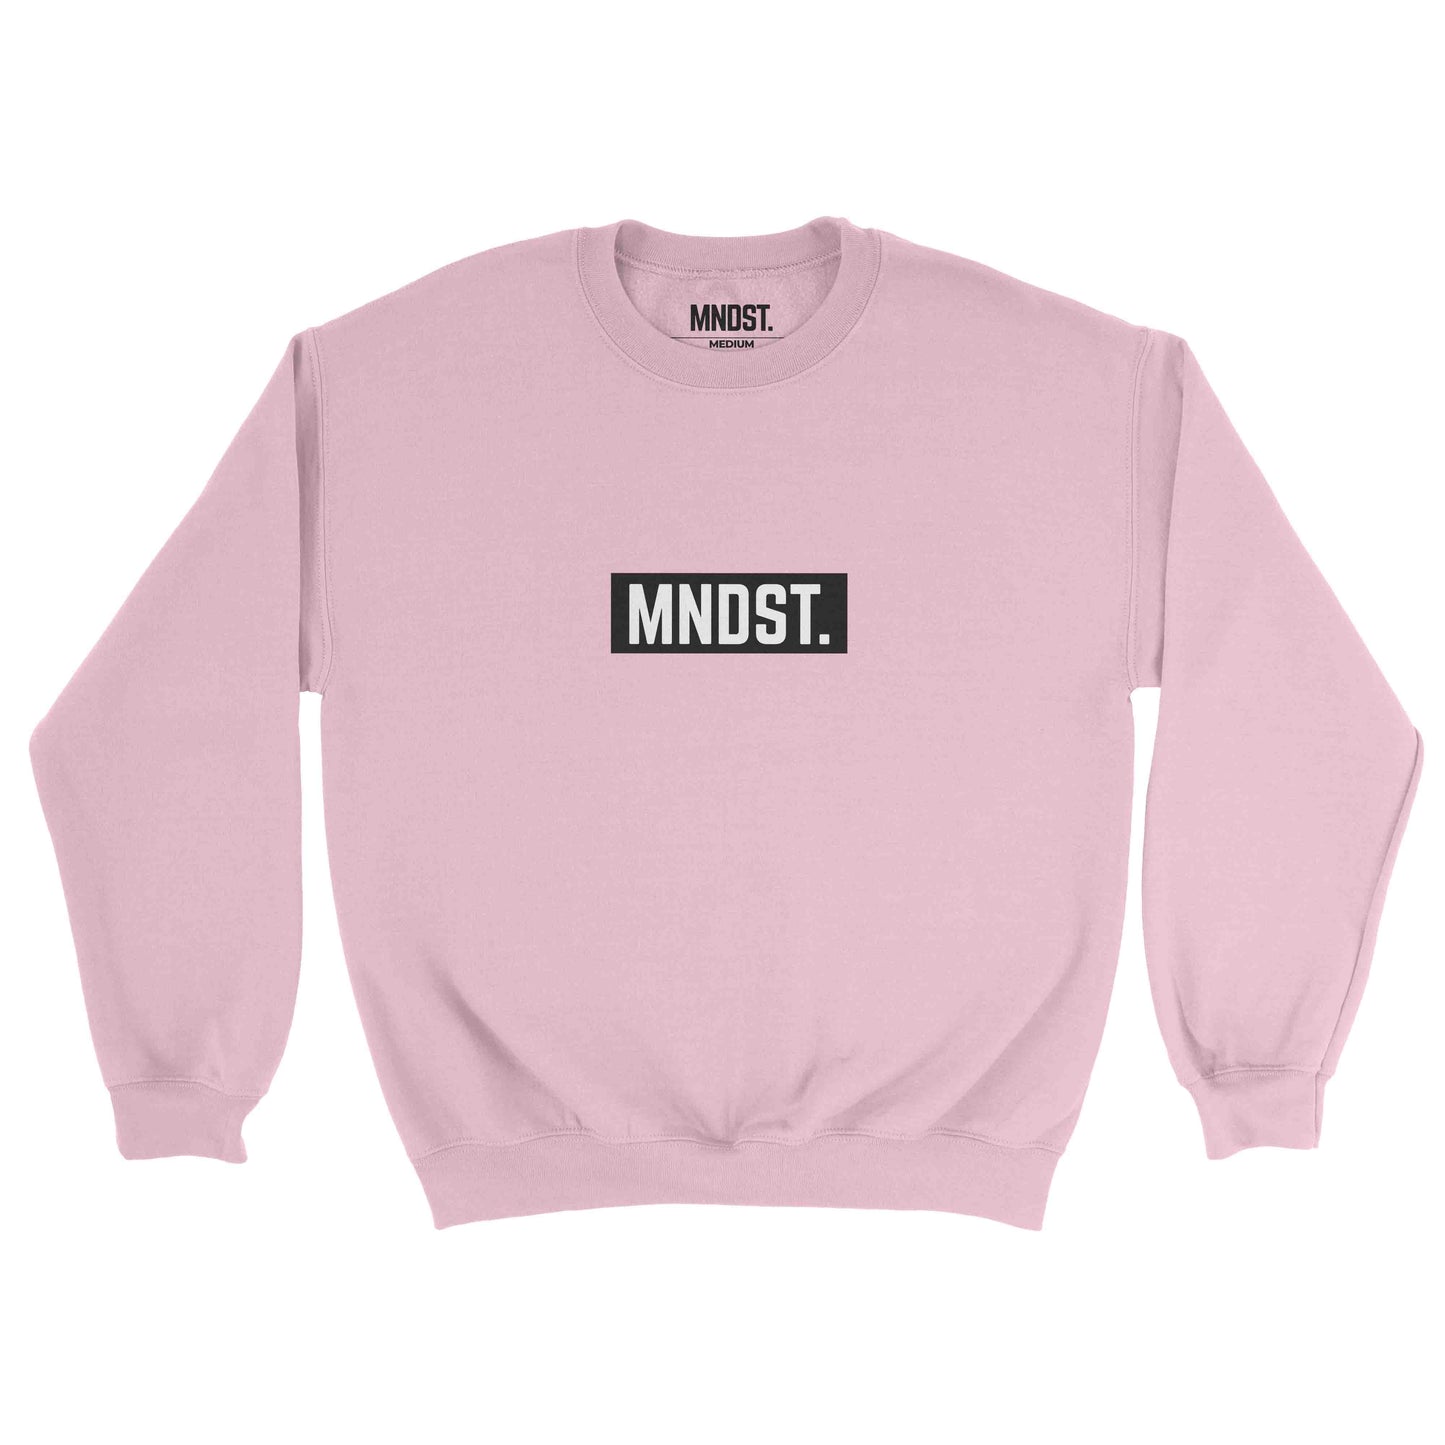 MNDST. Original Crewneck Sweatshirt